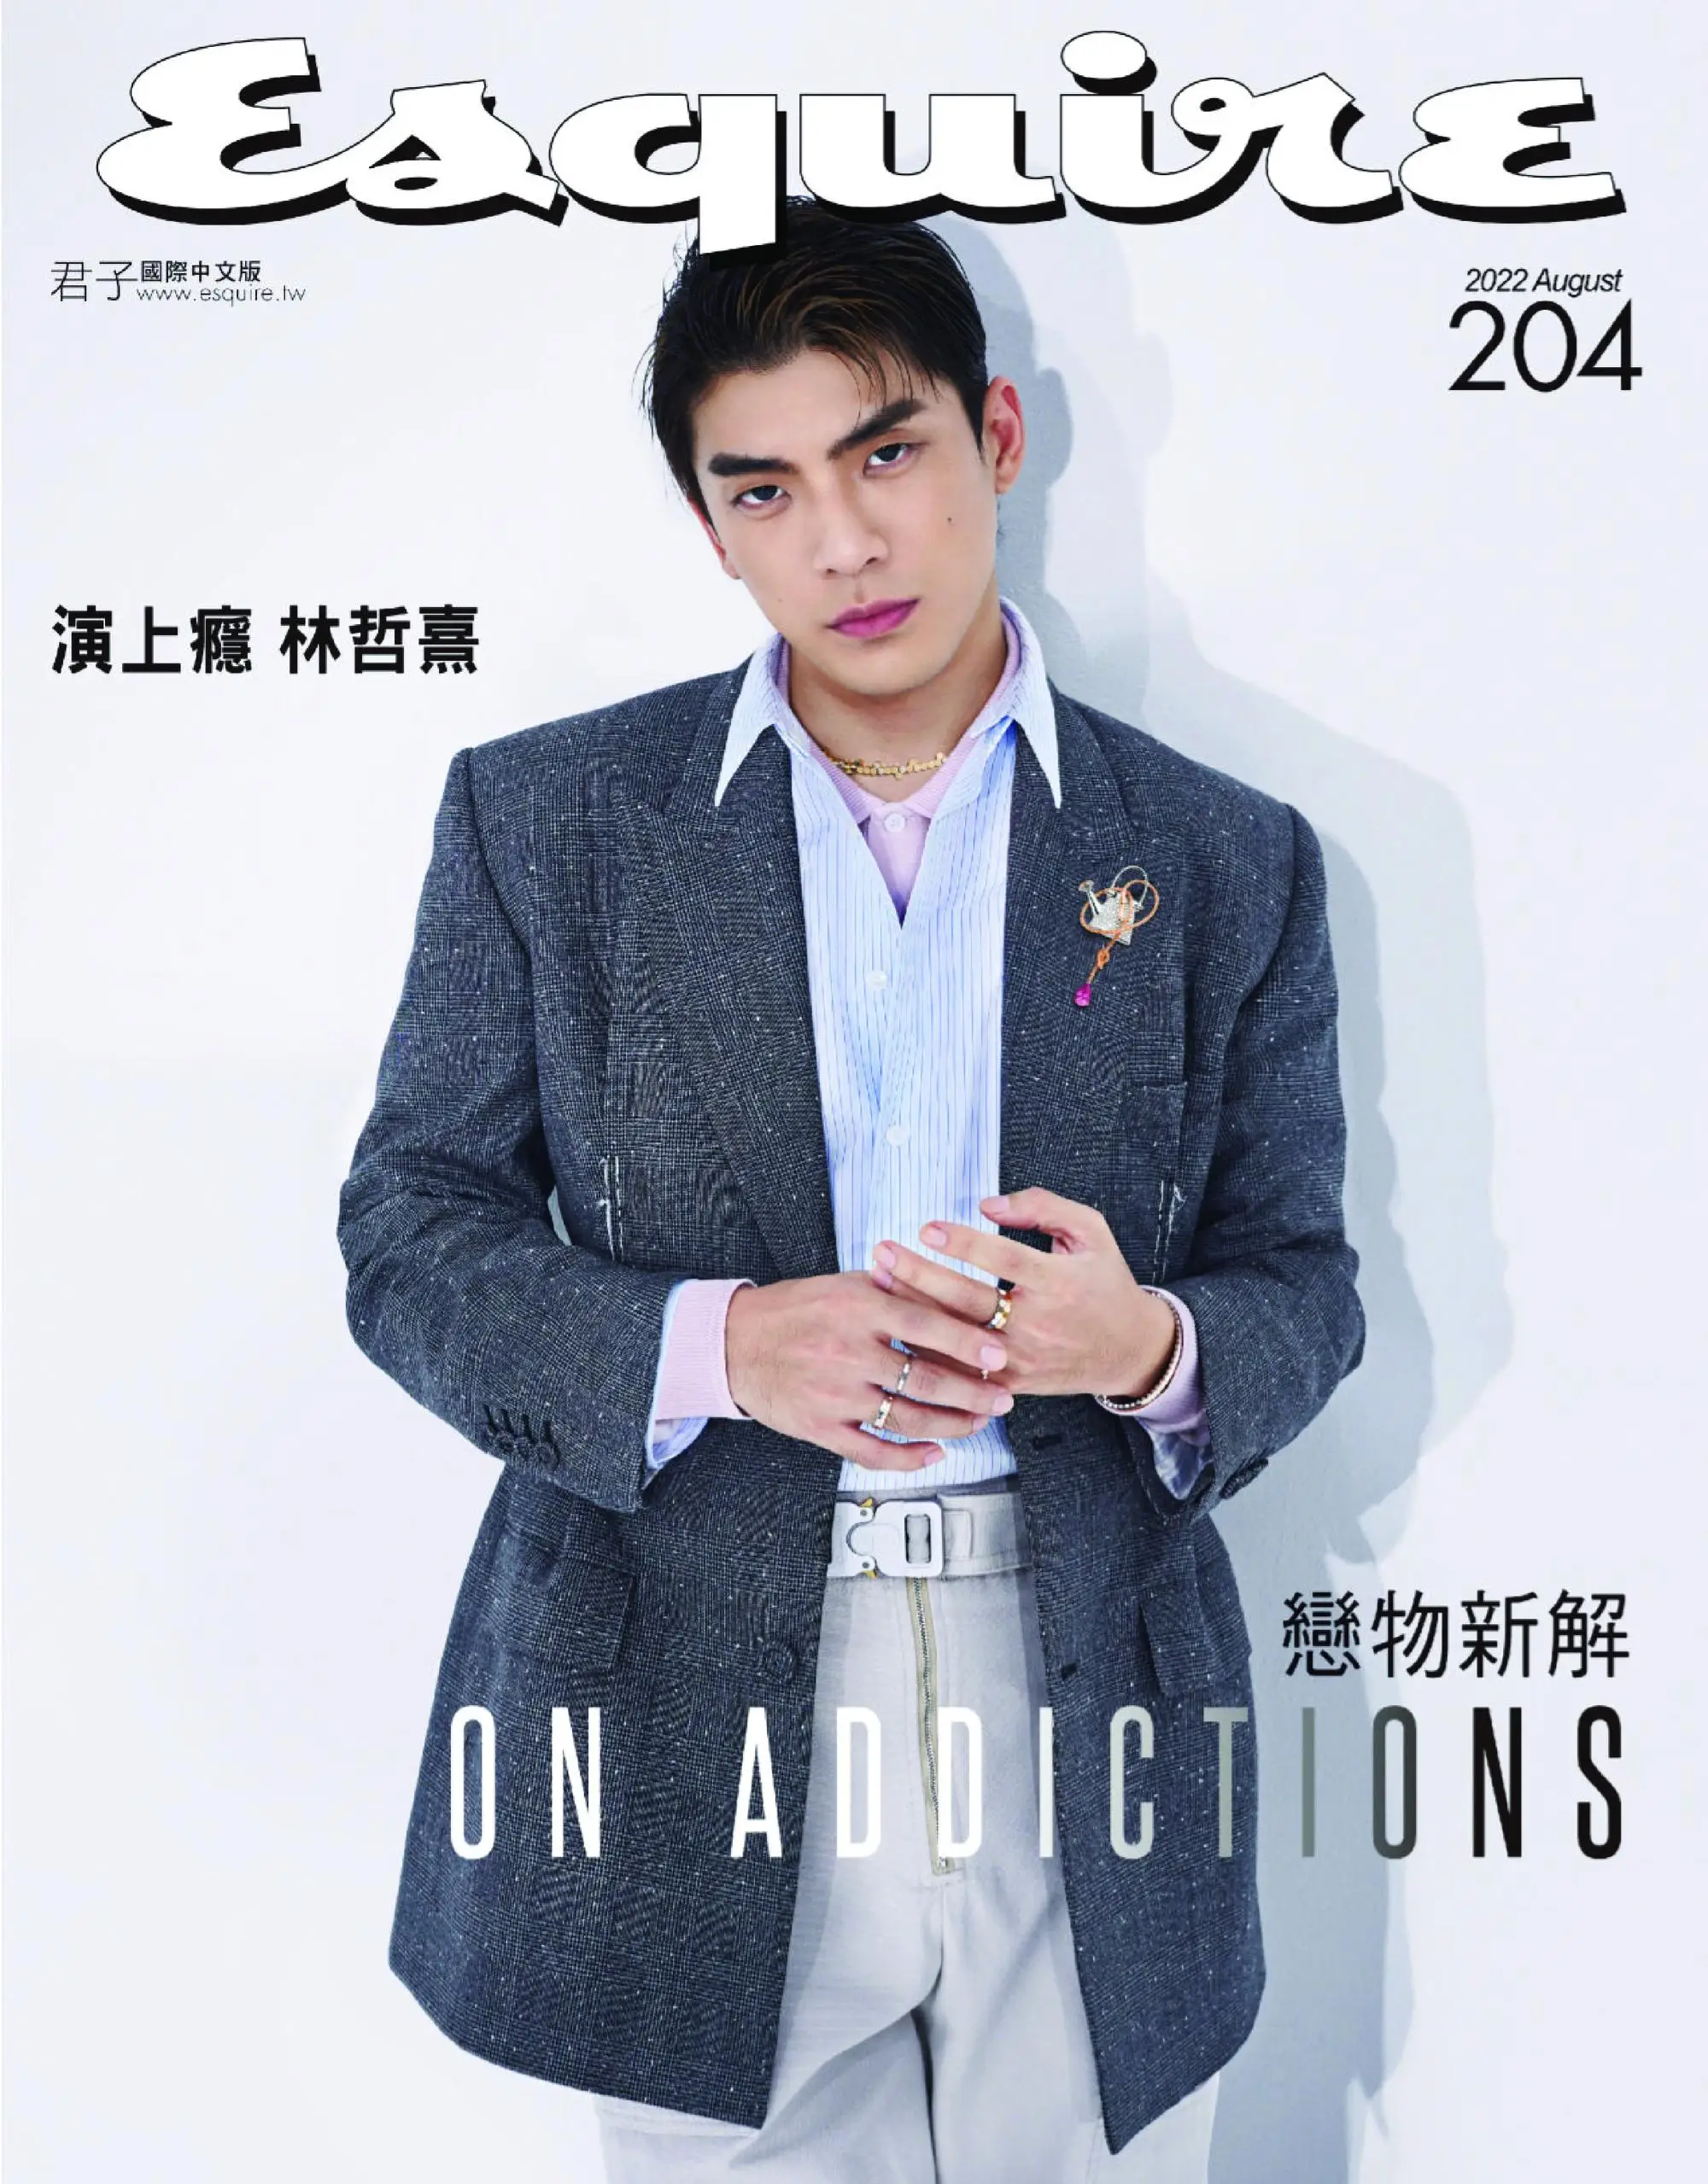 Esquire Taiwan 君子雜誌 2022年八月